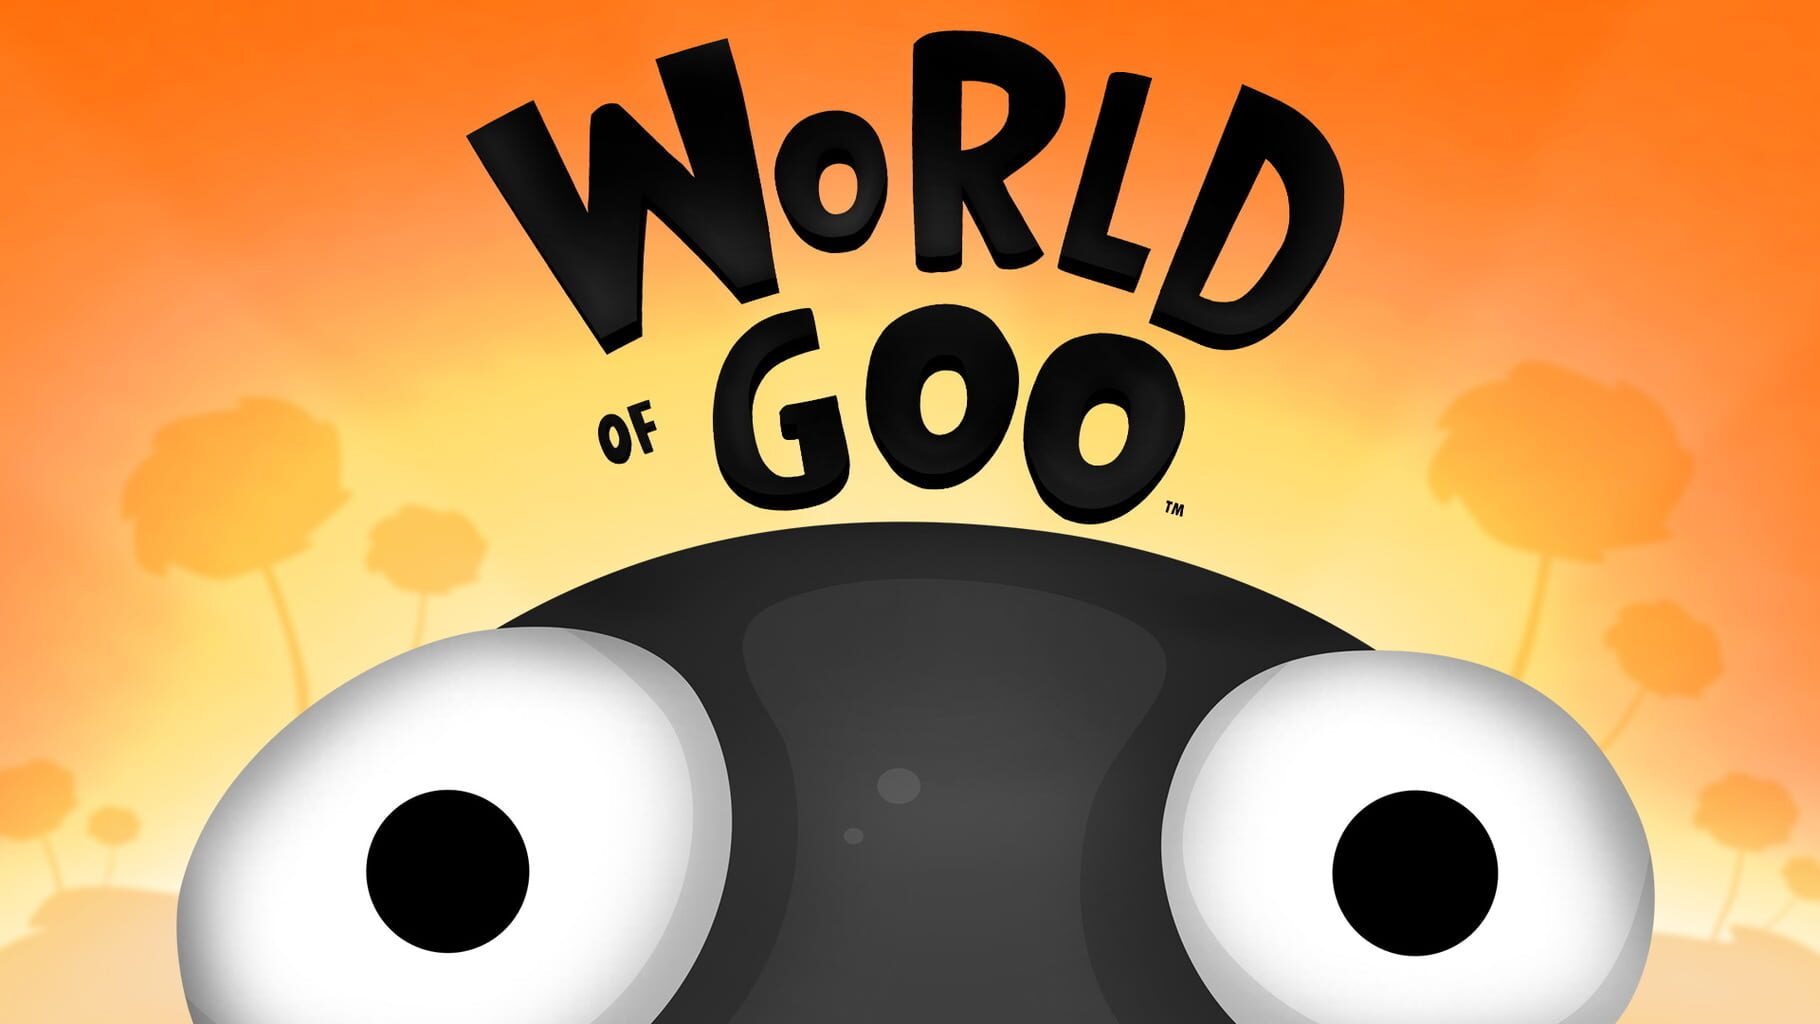 Arte - World of Goo